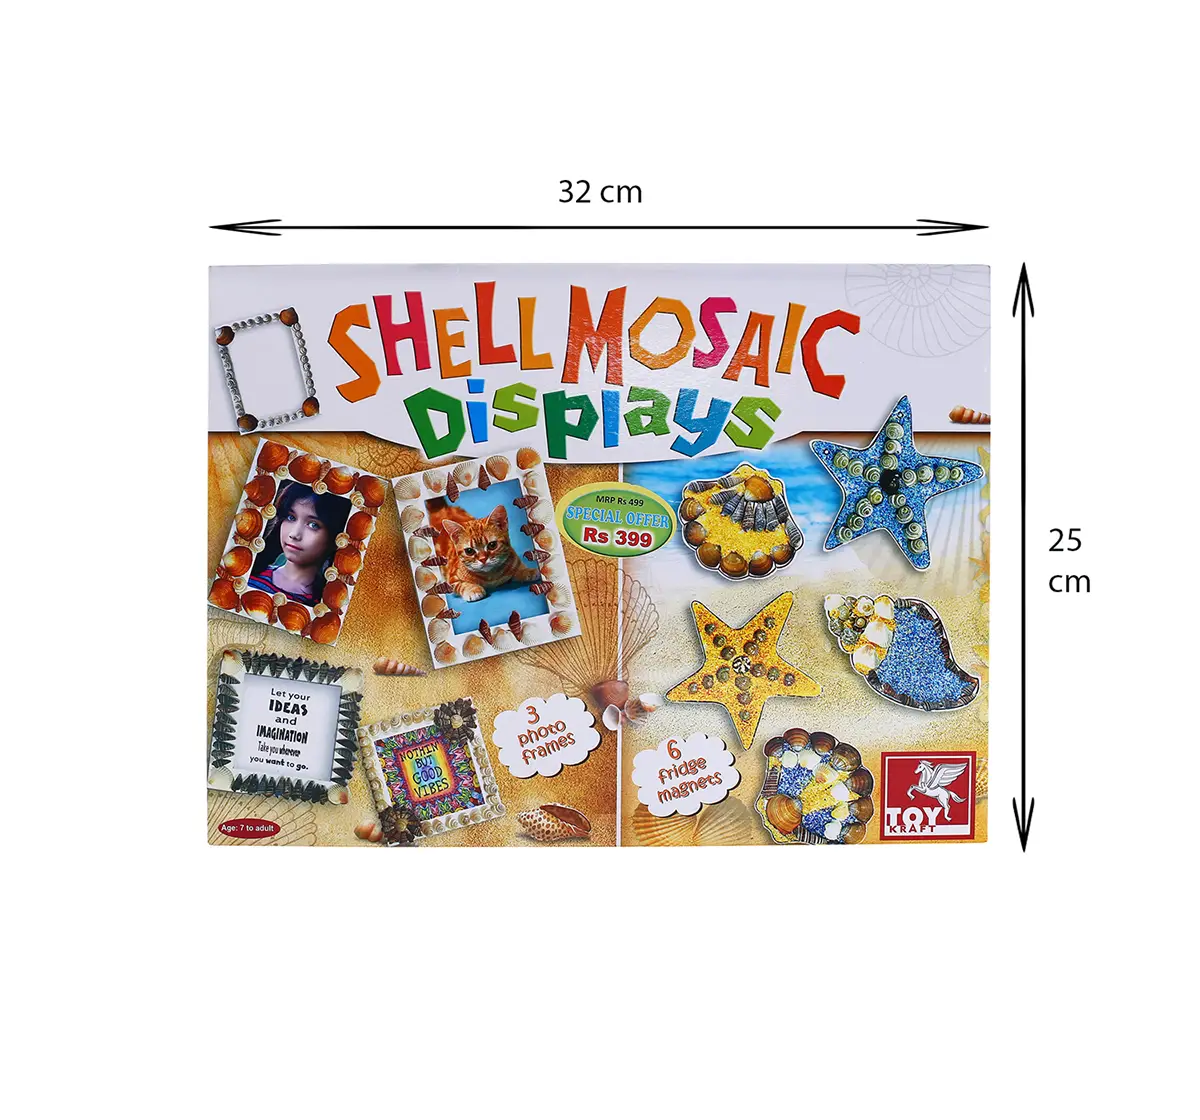  Toy Kraft Shell Mosaic Displays DIY Art & Craft Kits for Kids age 7Y+ 